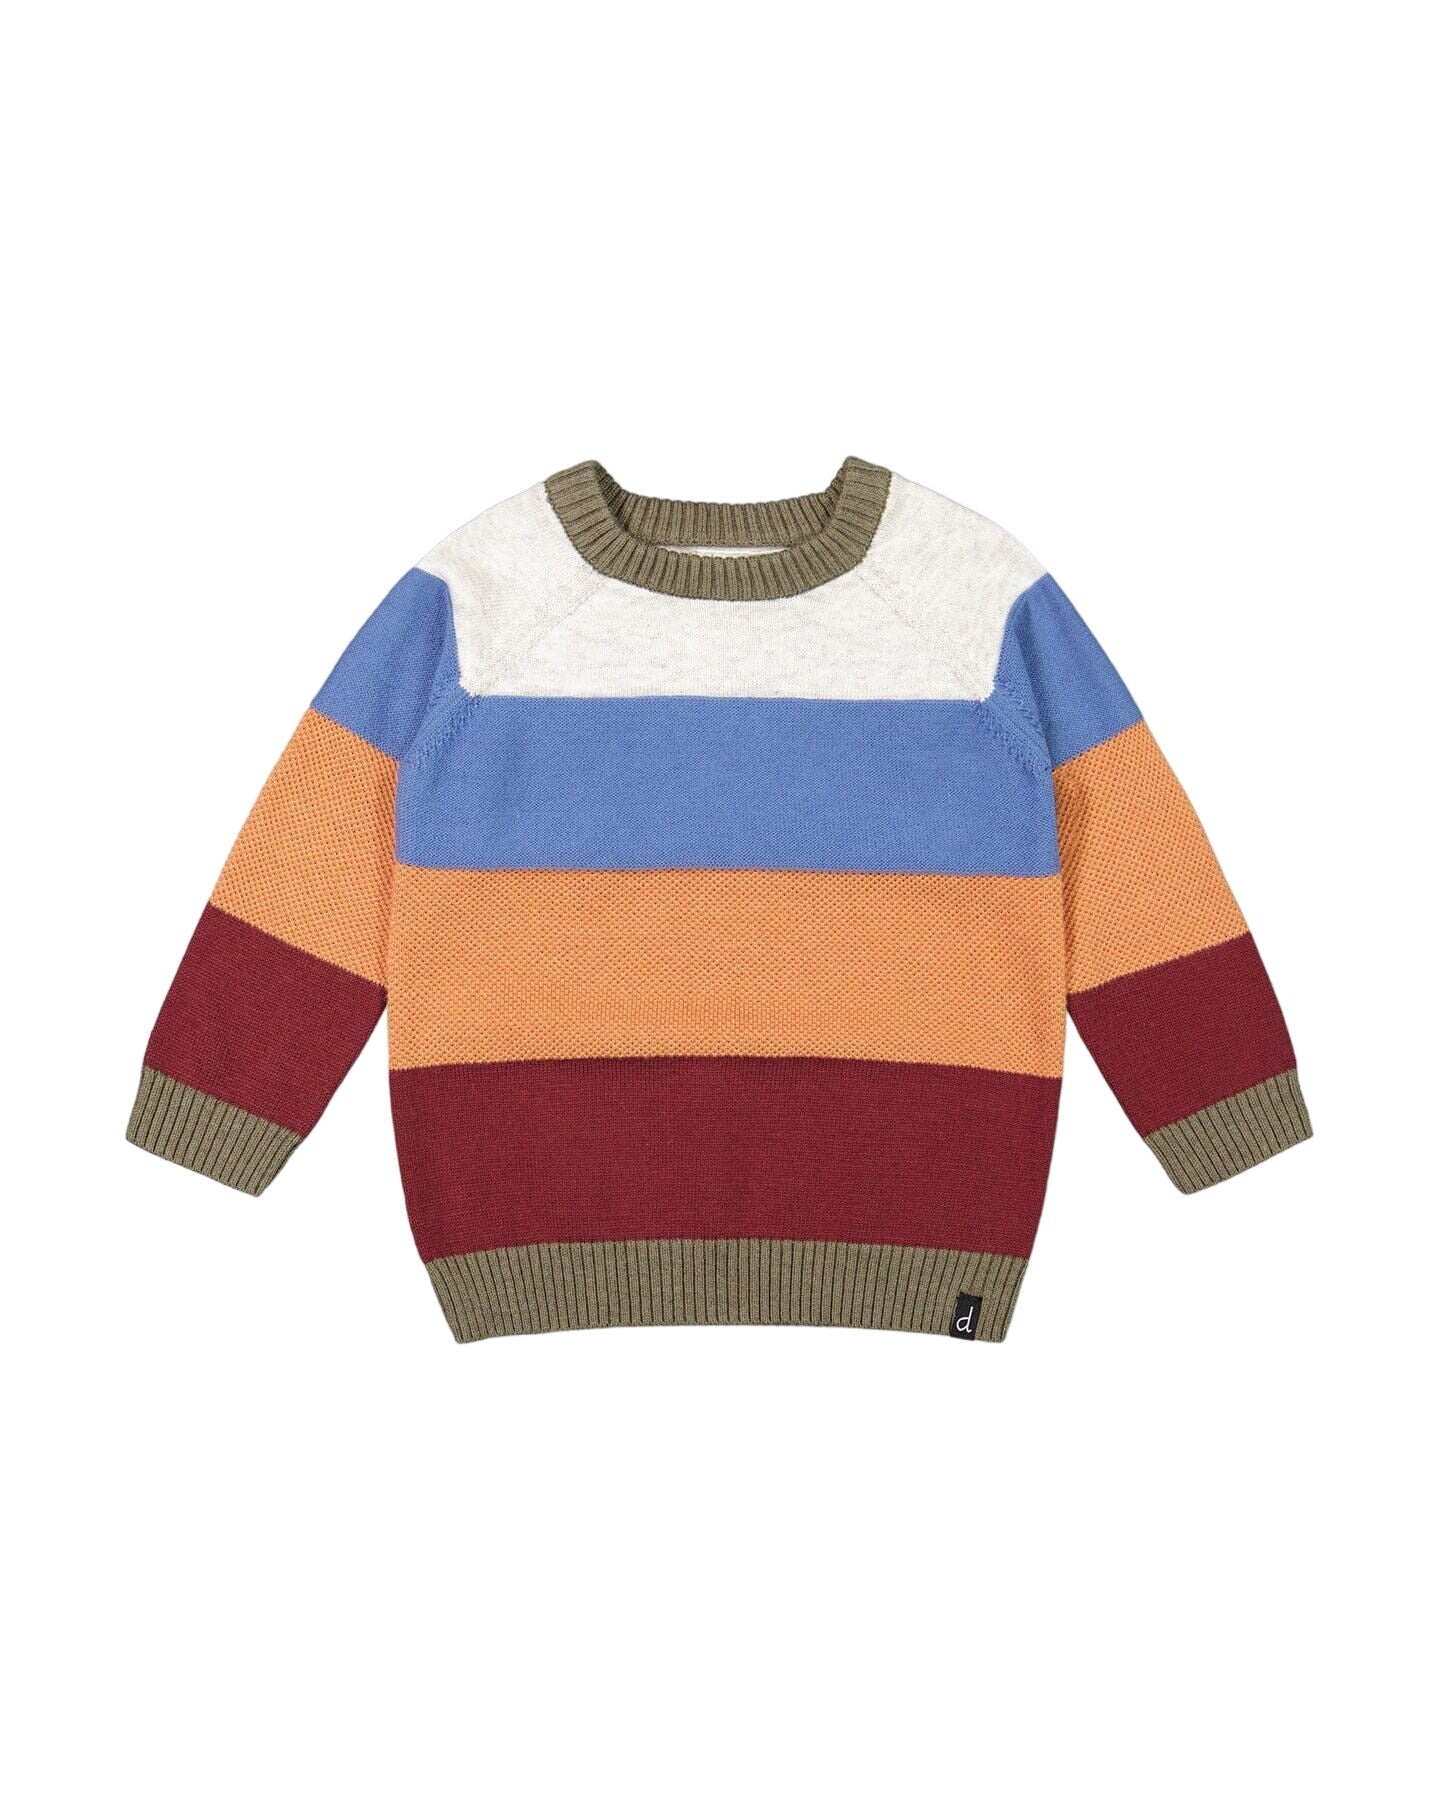 Knitted Raglan Sweater Red Wine, Burnt Orange And Oatmeal Stripe